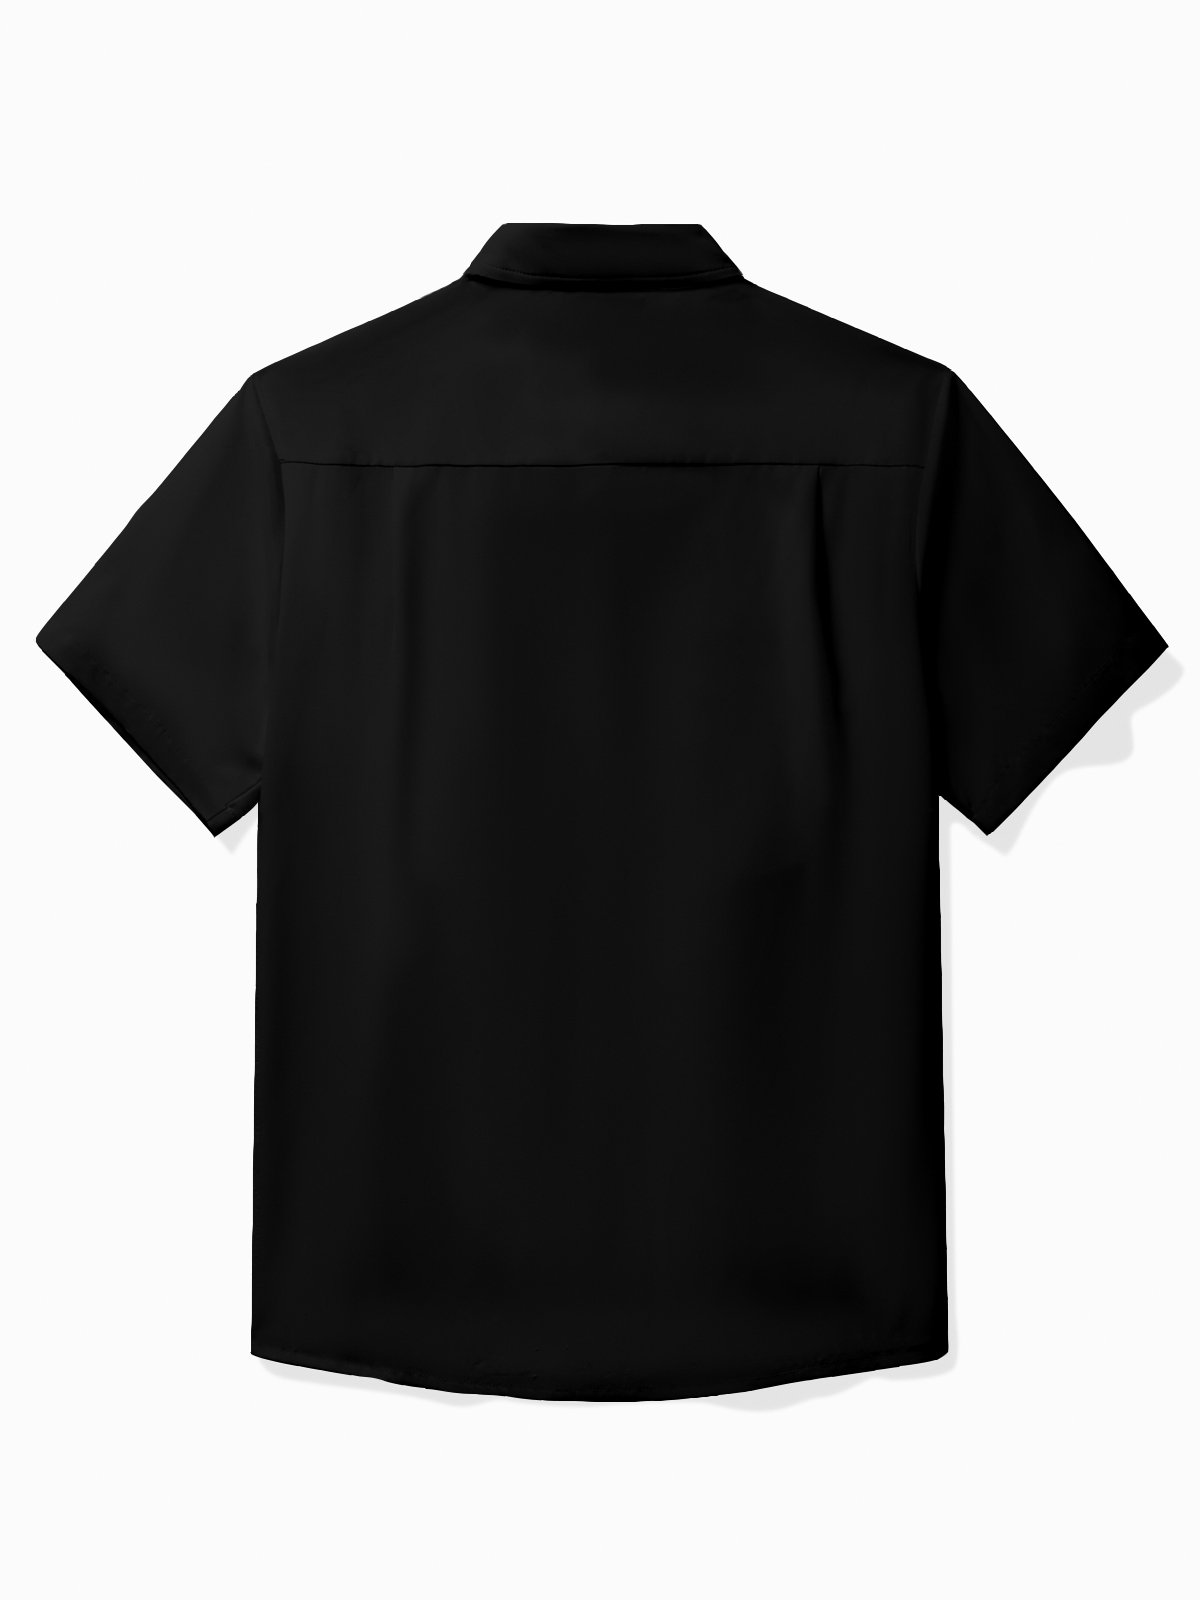 Royaura®  Vintage Bowling Yellow Floral Print Chest Pocket Shirt Plus Size Men's Shirt